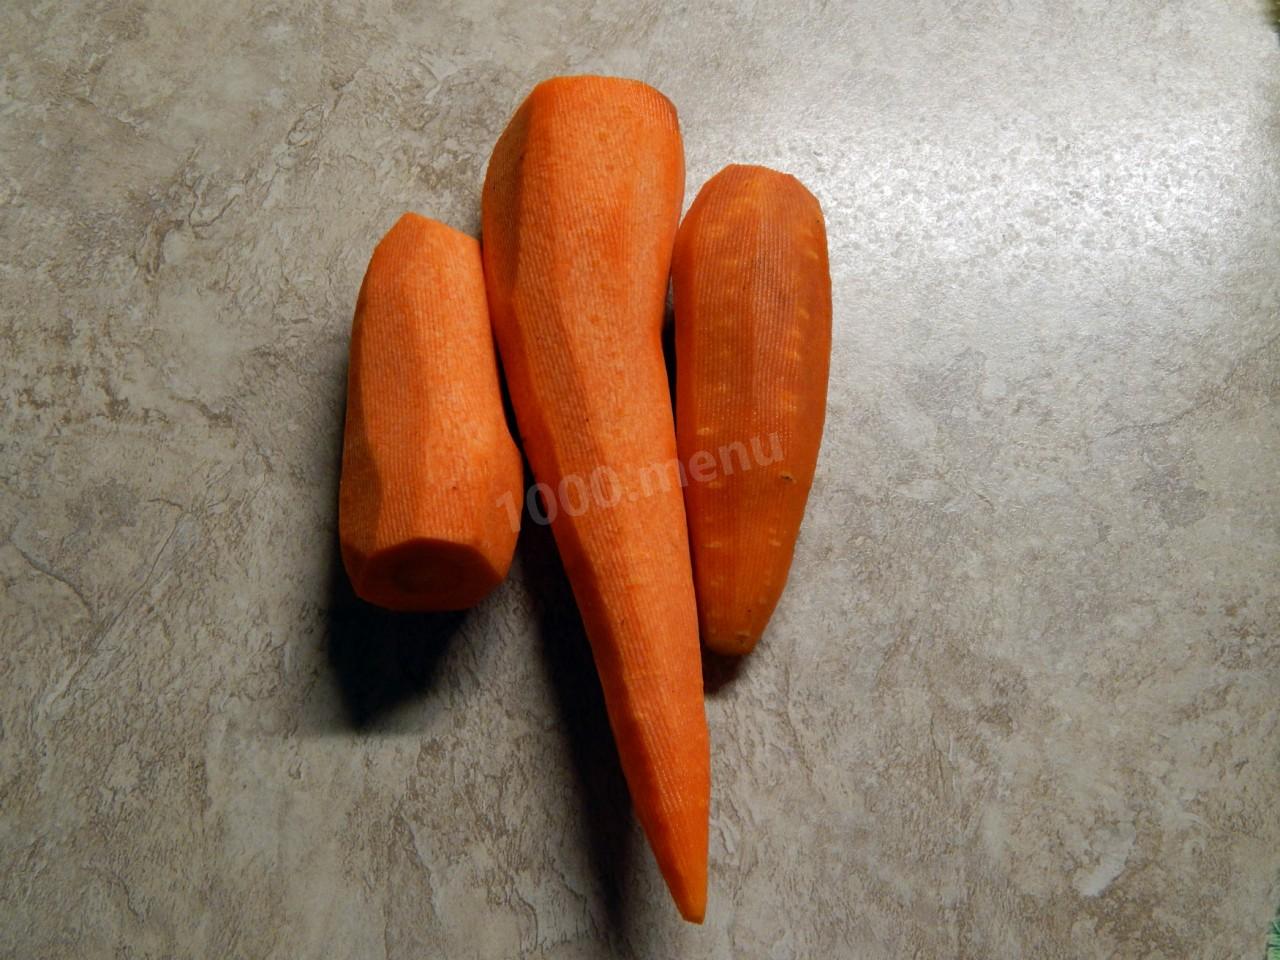 Морковь На Зиму Пошагово Фото